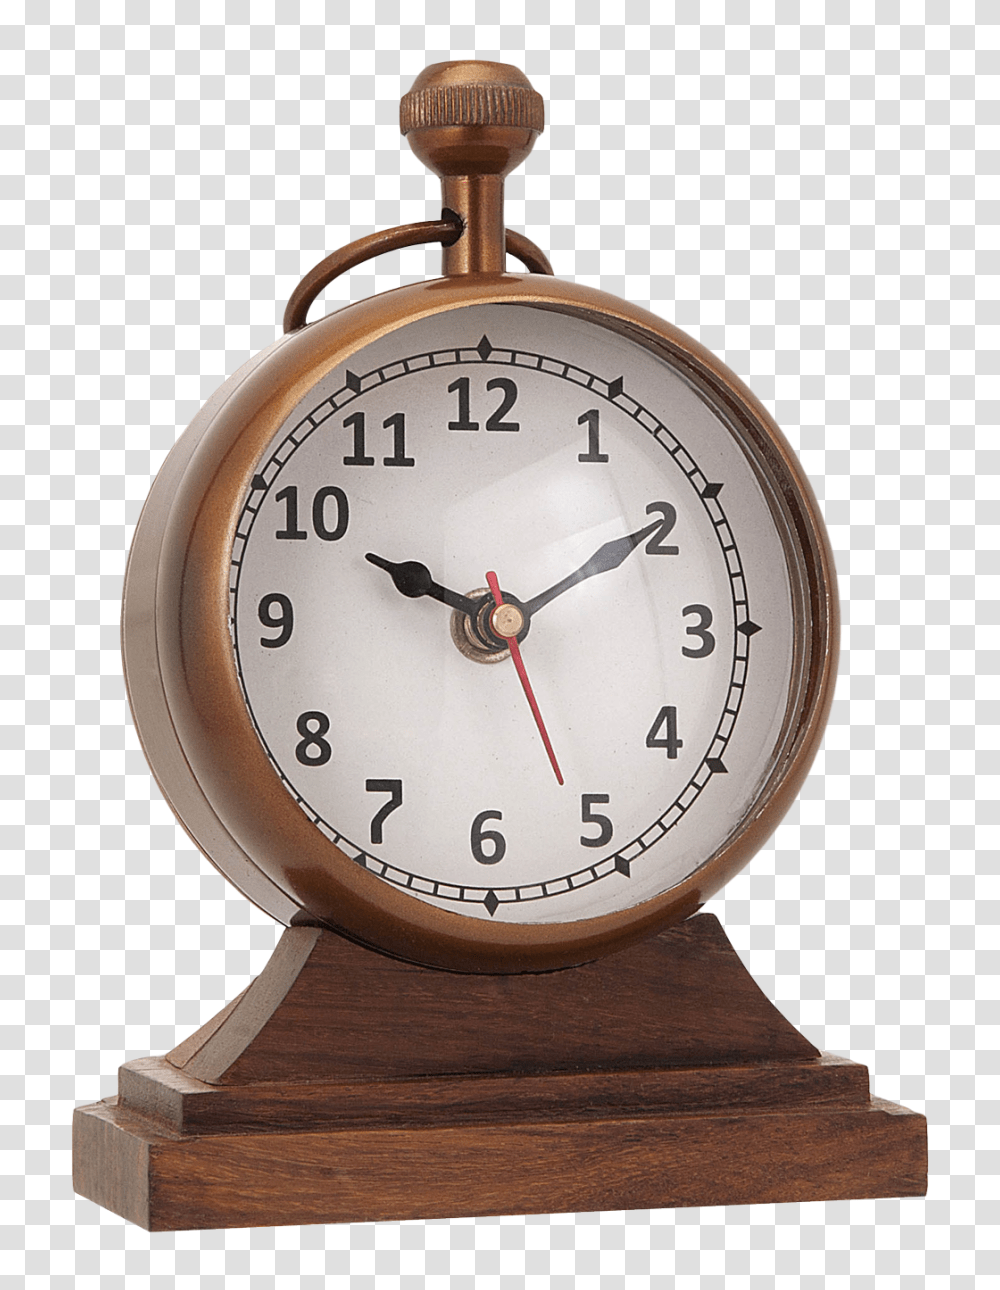 Wooden Alarm Clock Image, Electronics, Clock Tower, Architecture, Building Transparent Png